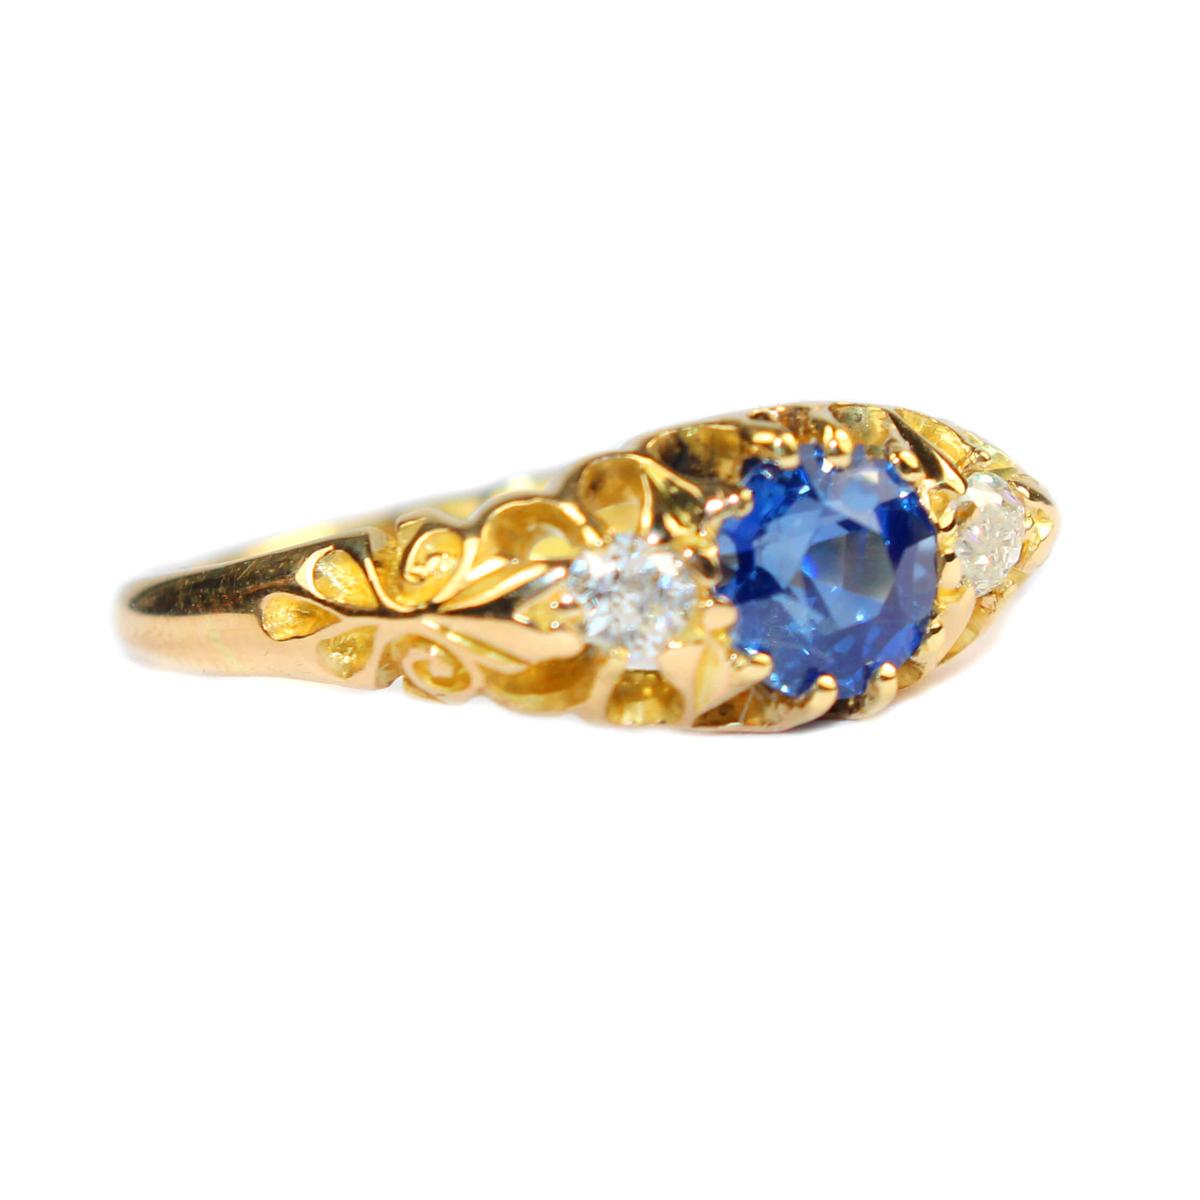 Edwardian Sapphire and Diamond Ring circa 1901